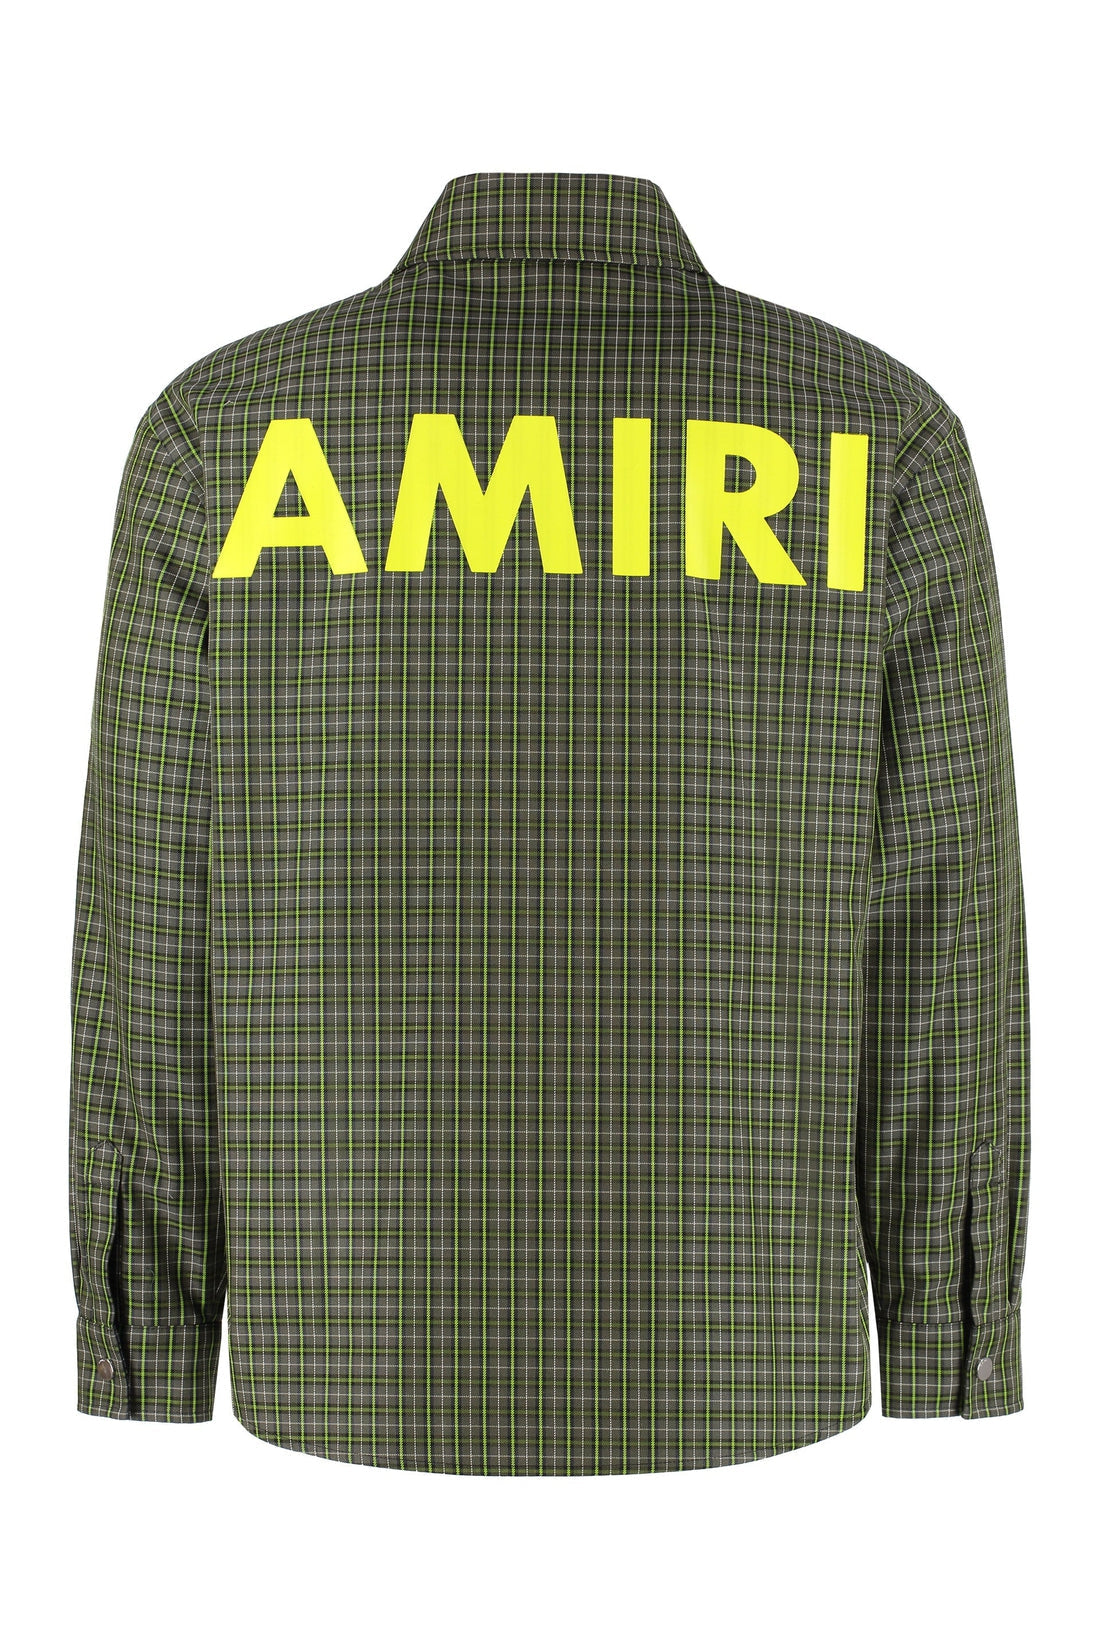 AMIRI-OUTLET-SALE-Technical fabric overshirt-ARCHIVIST